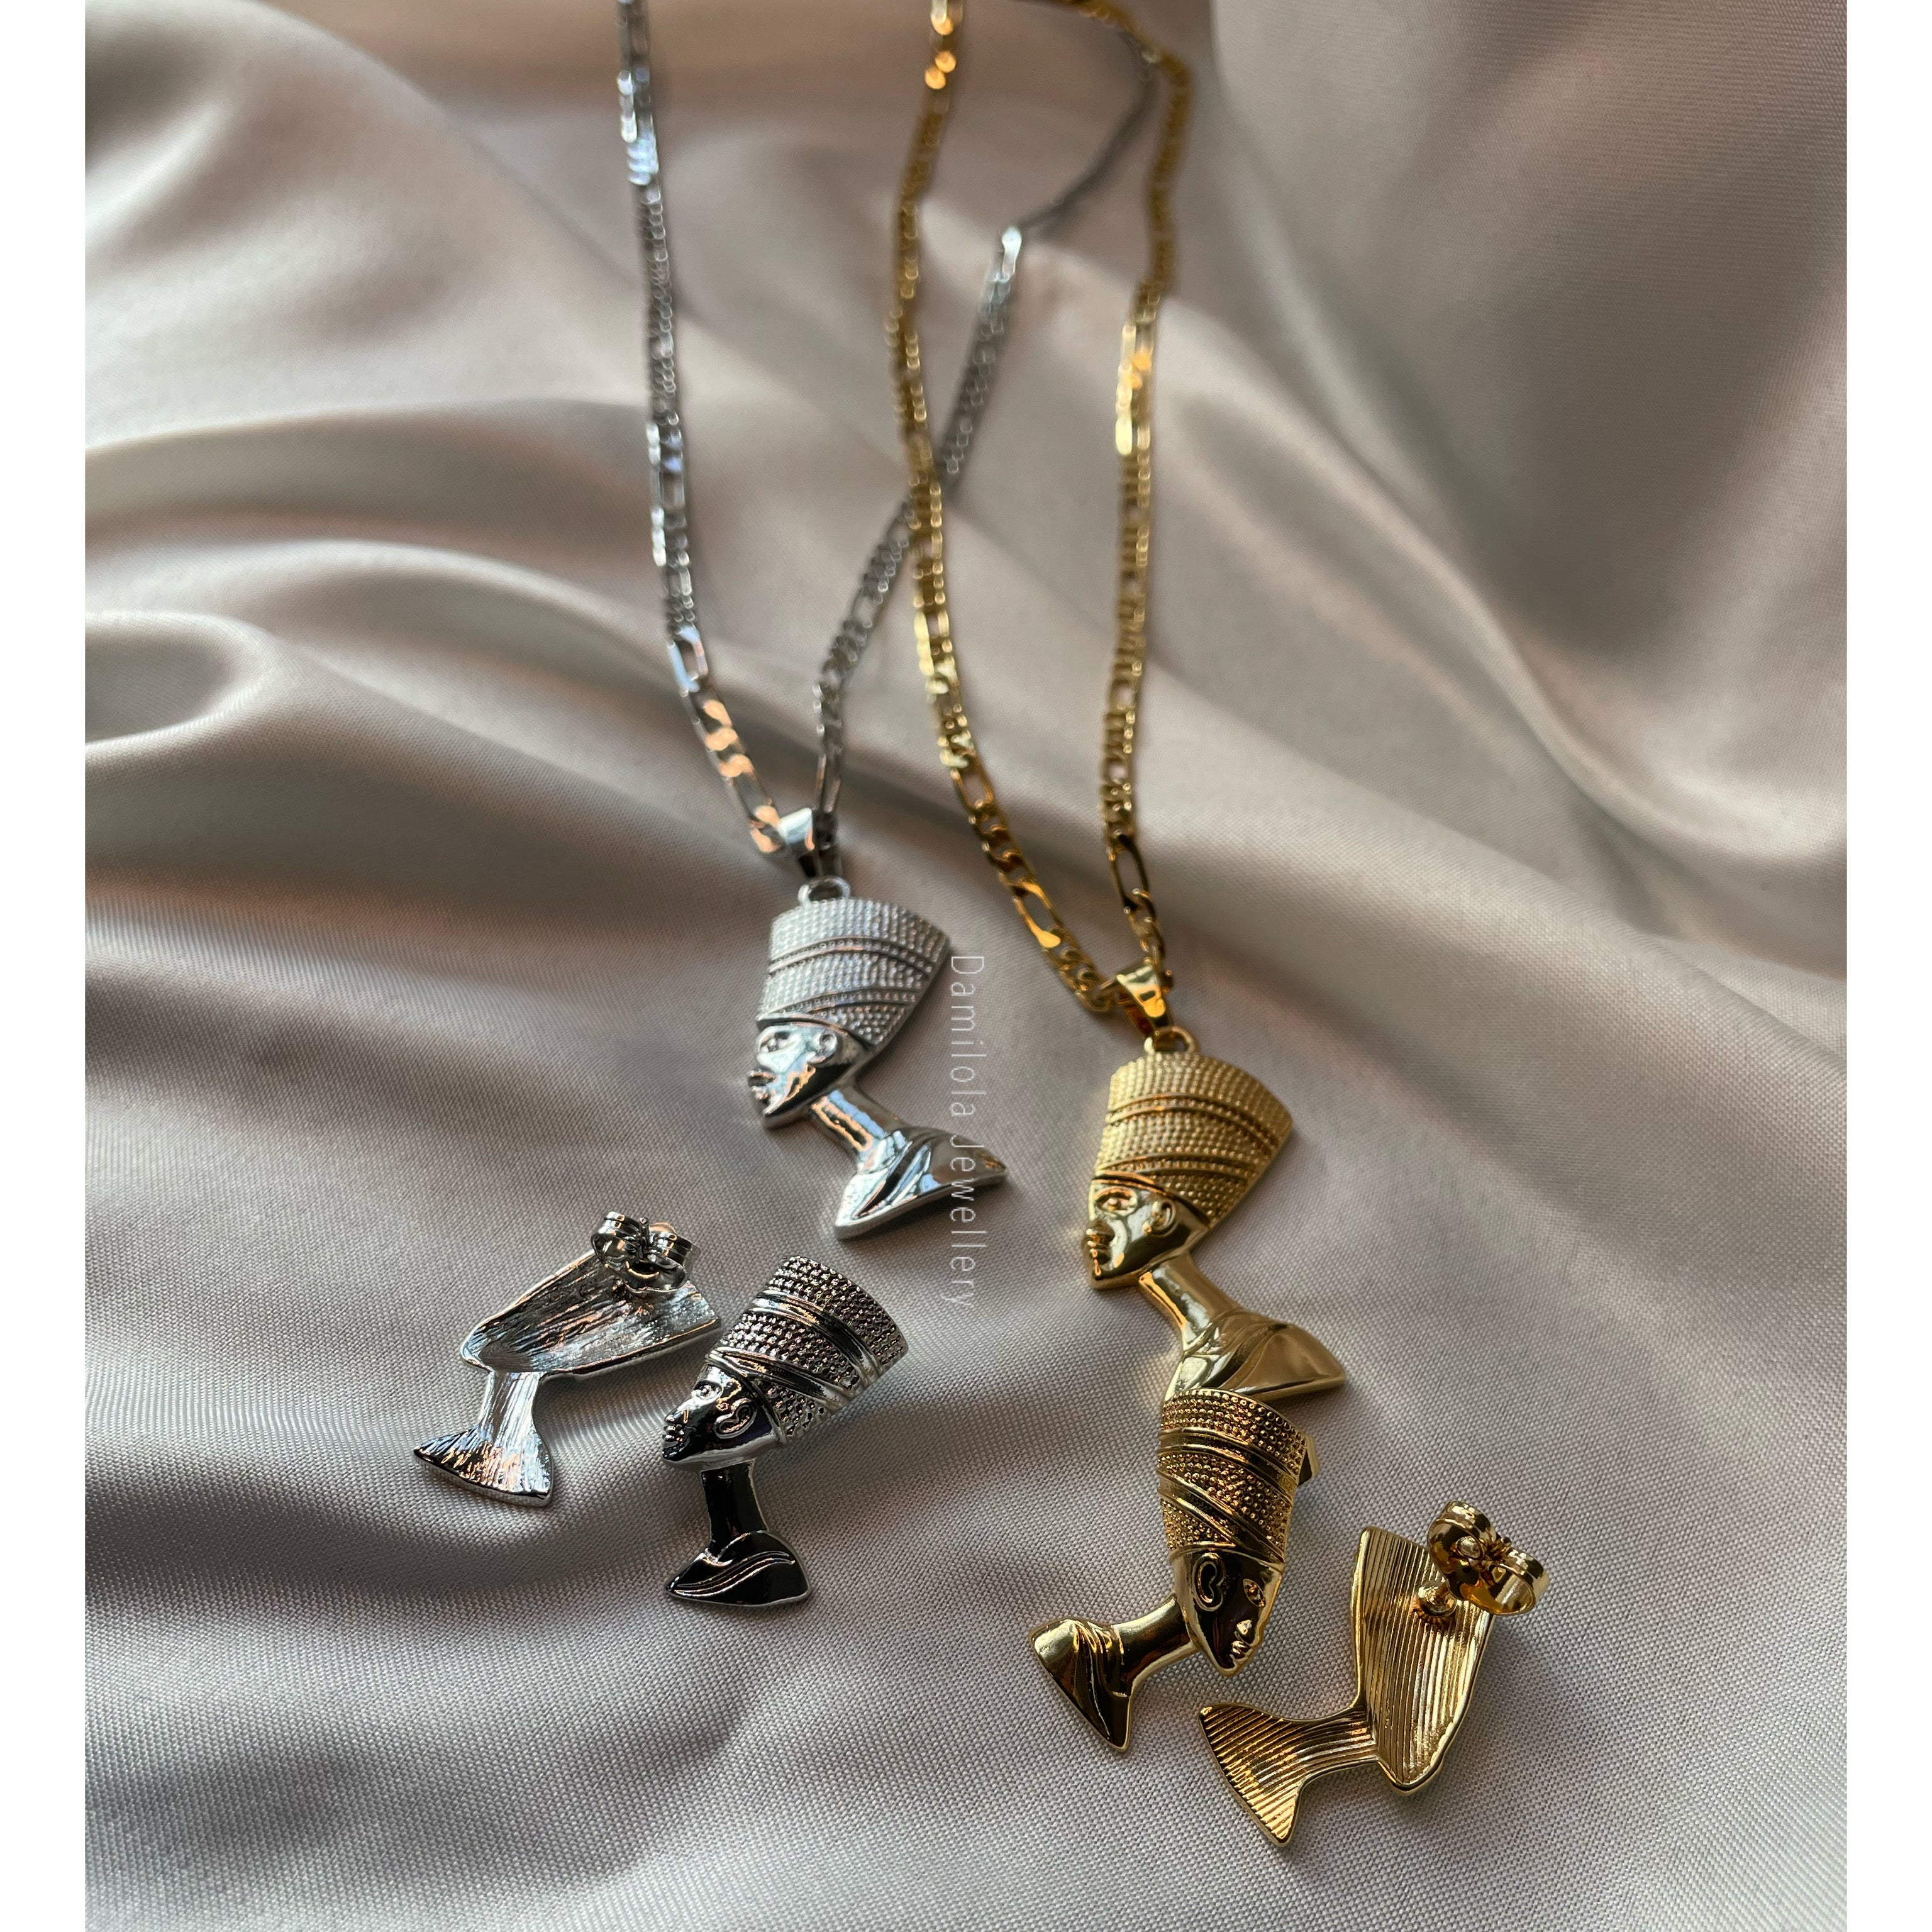 'Queen Nefertiti' - Gold/Silver Necklace Jewellery